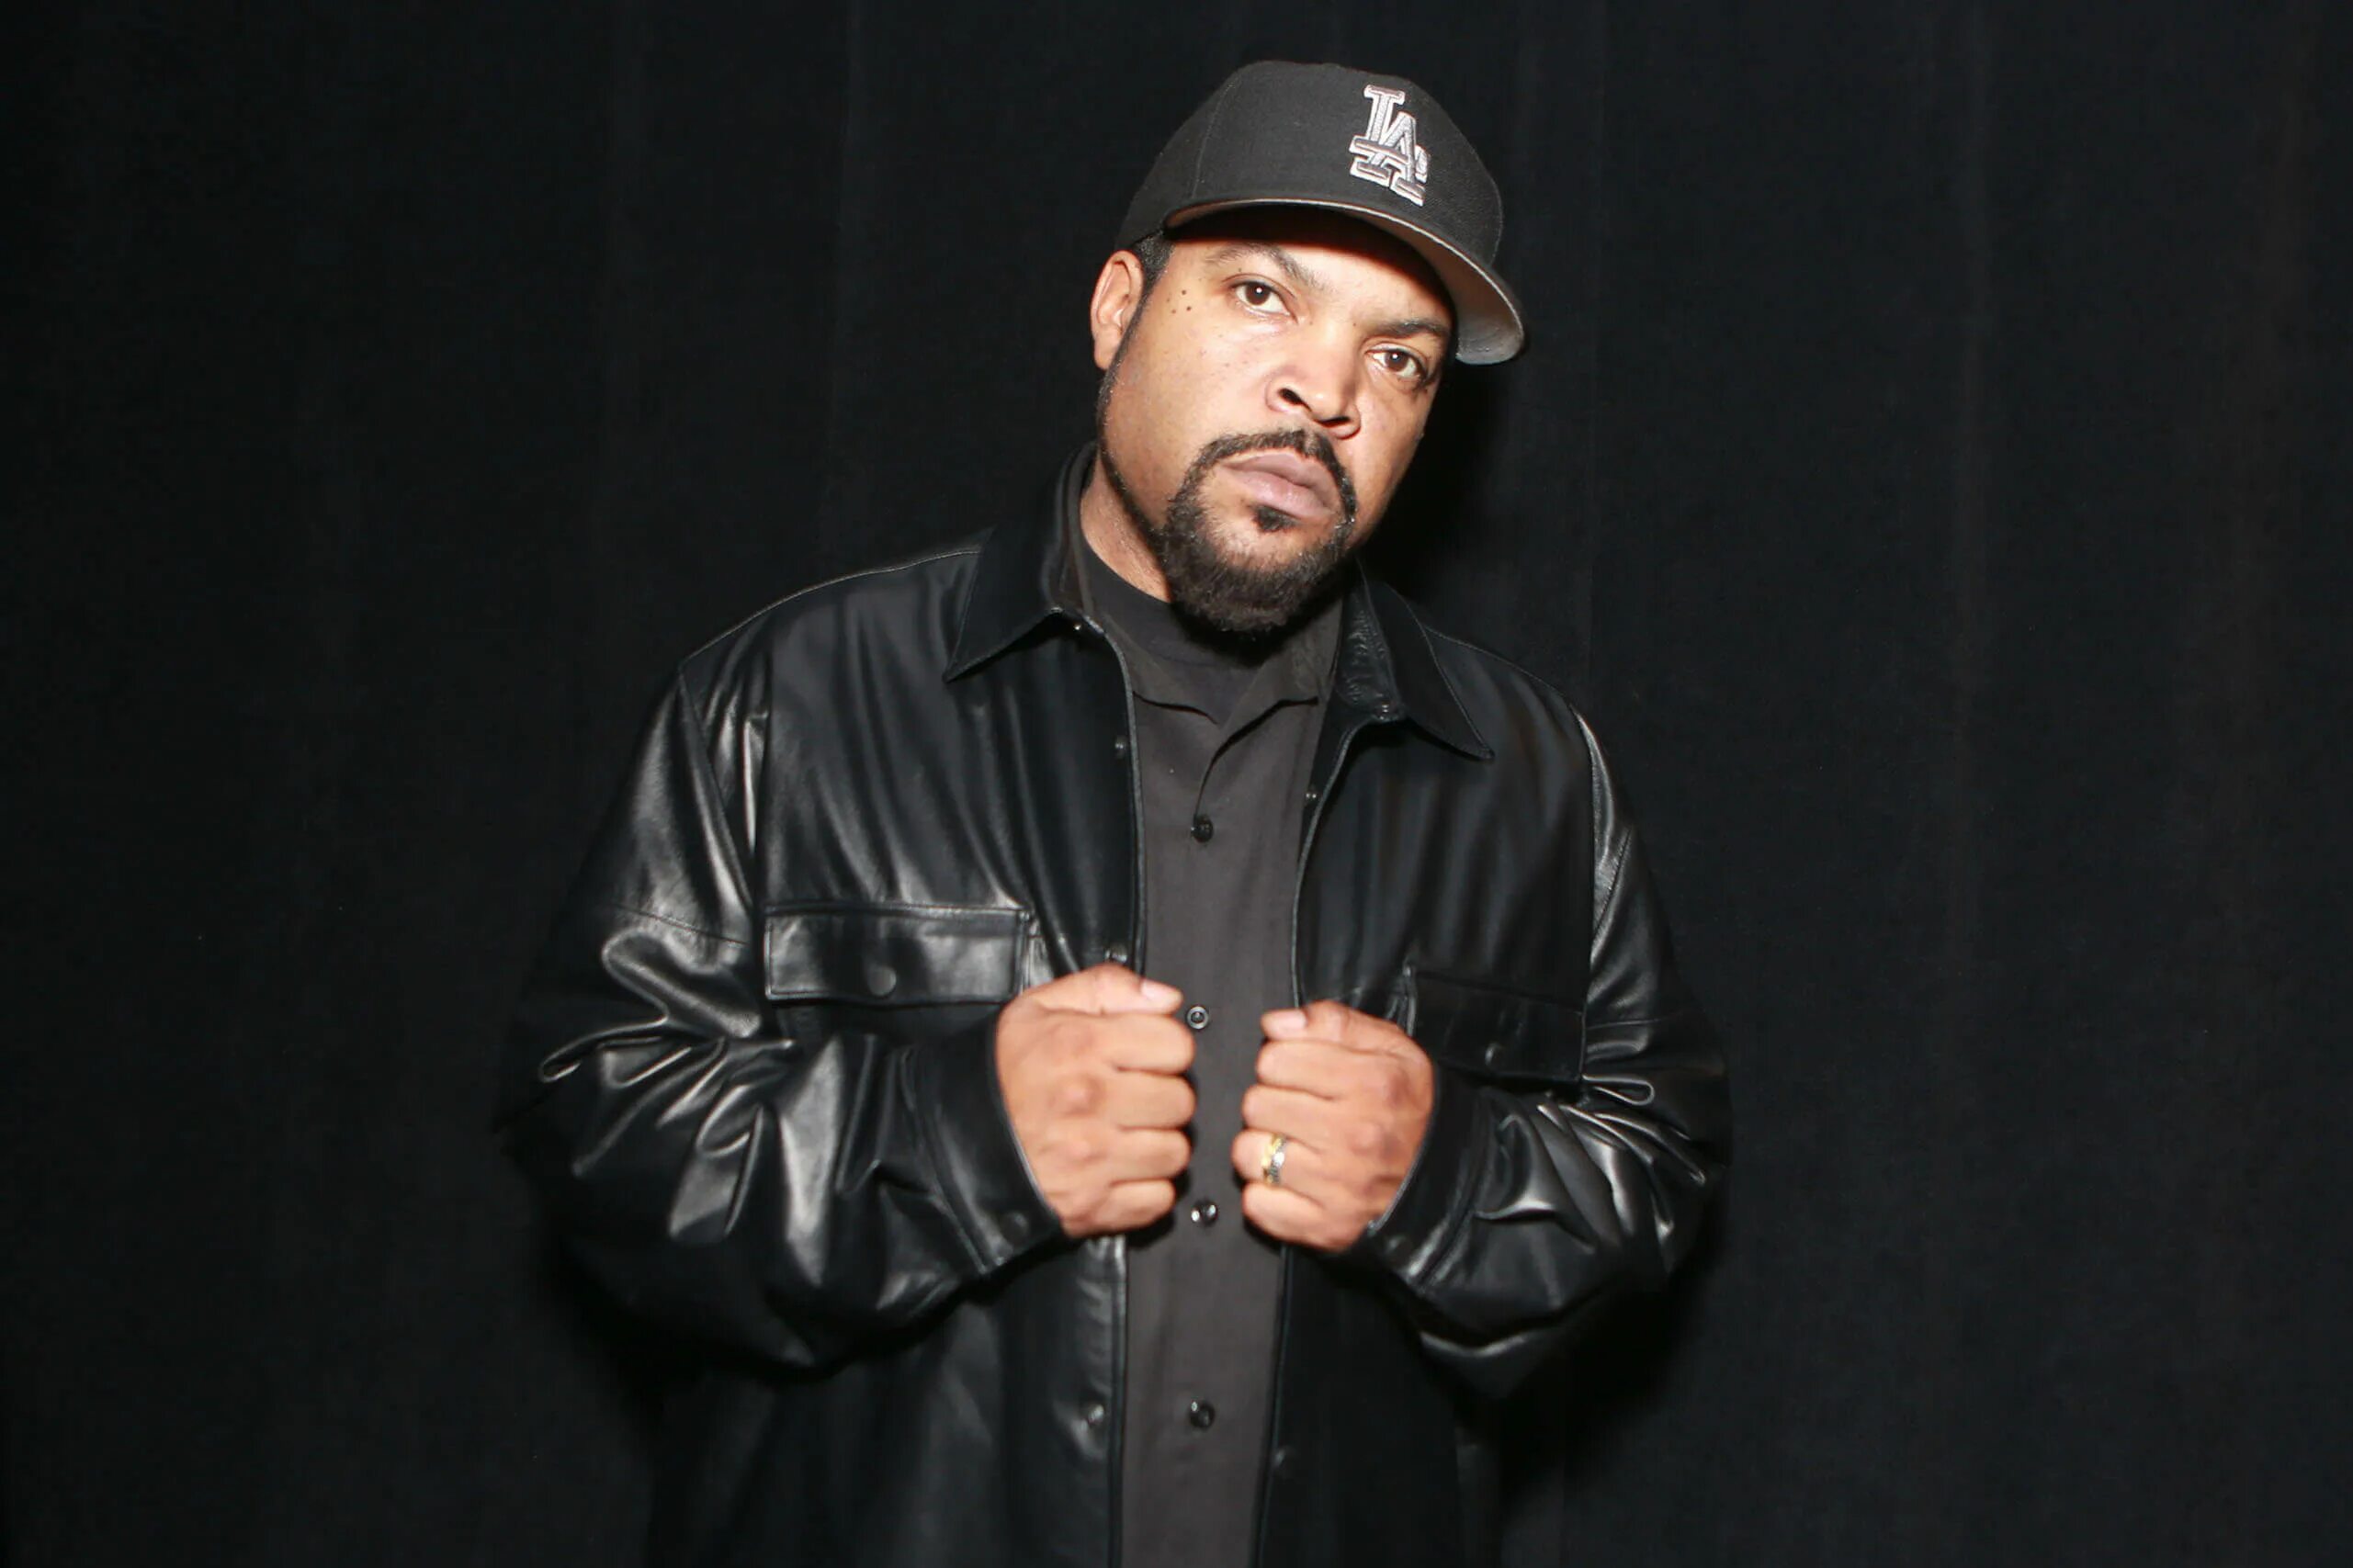 Айс Кьюб (Ice Cube). Айс Кьюб 2022. Ice Cube 19. Ice Cube 2000.